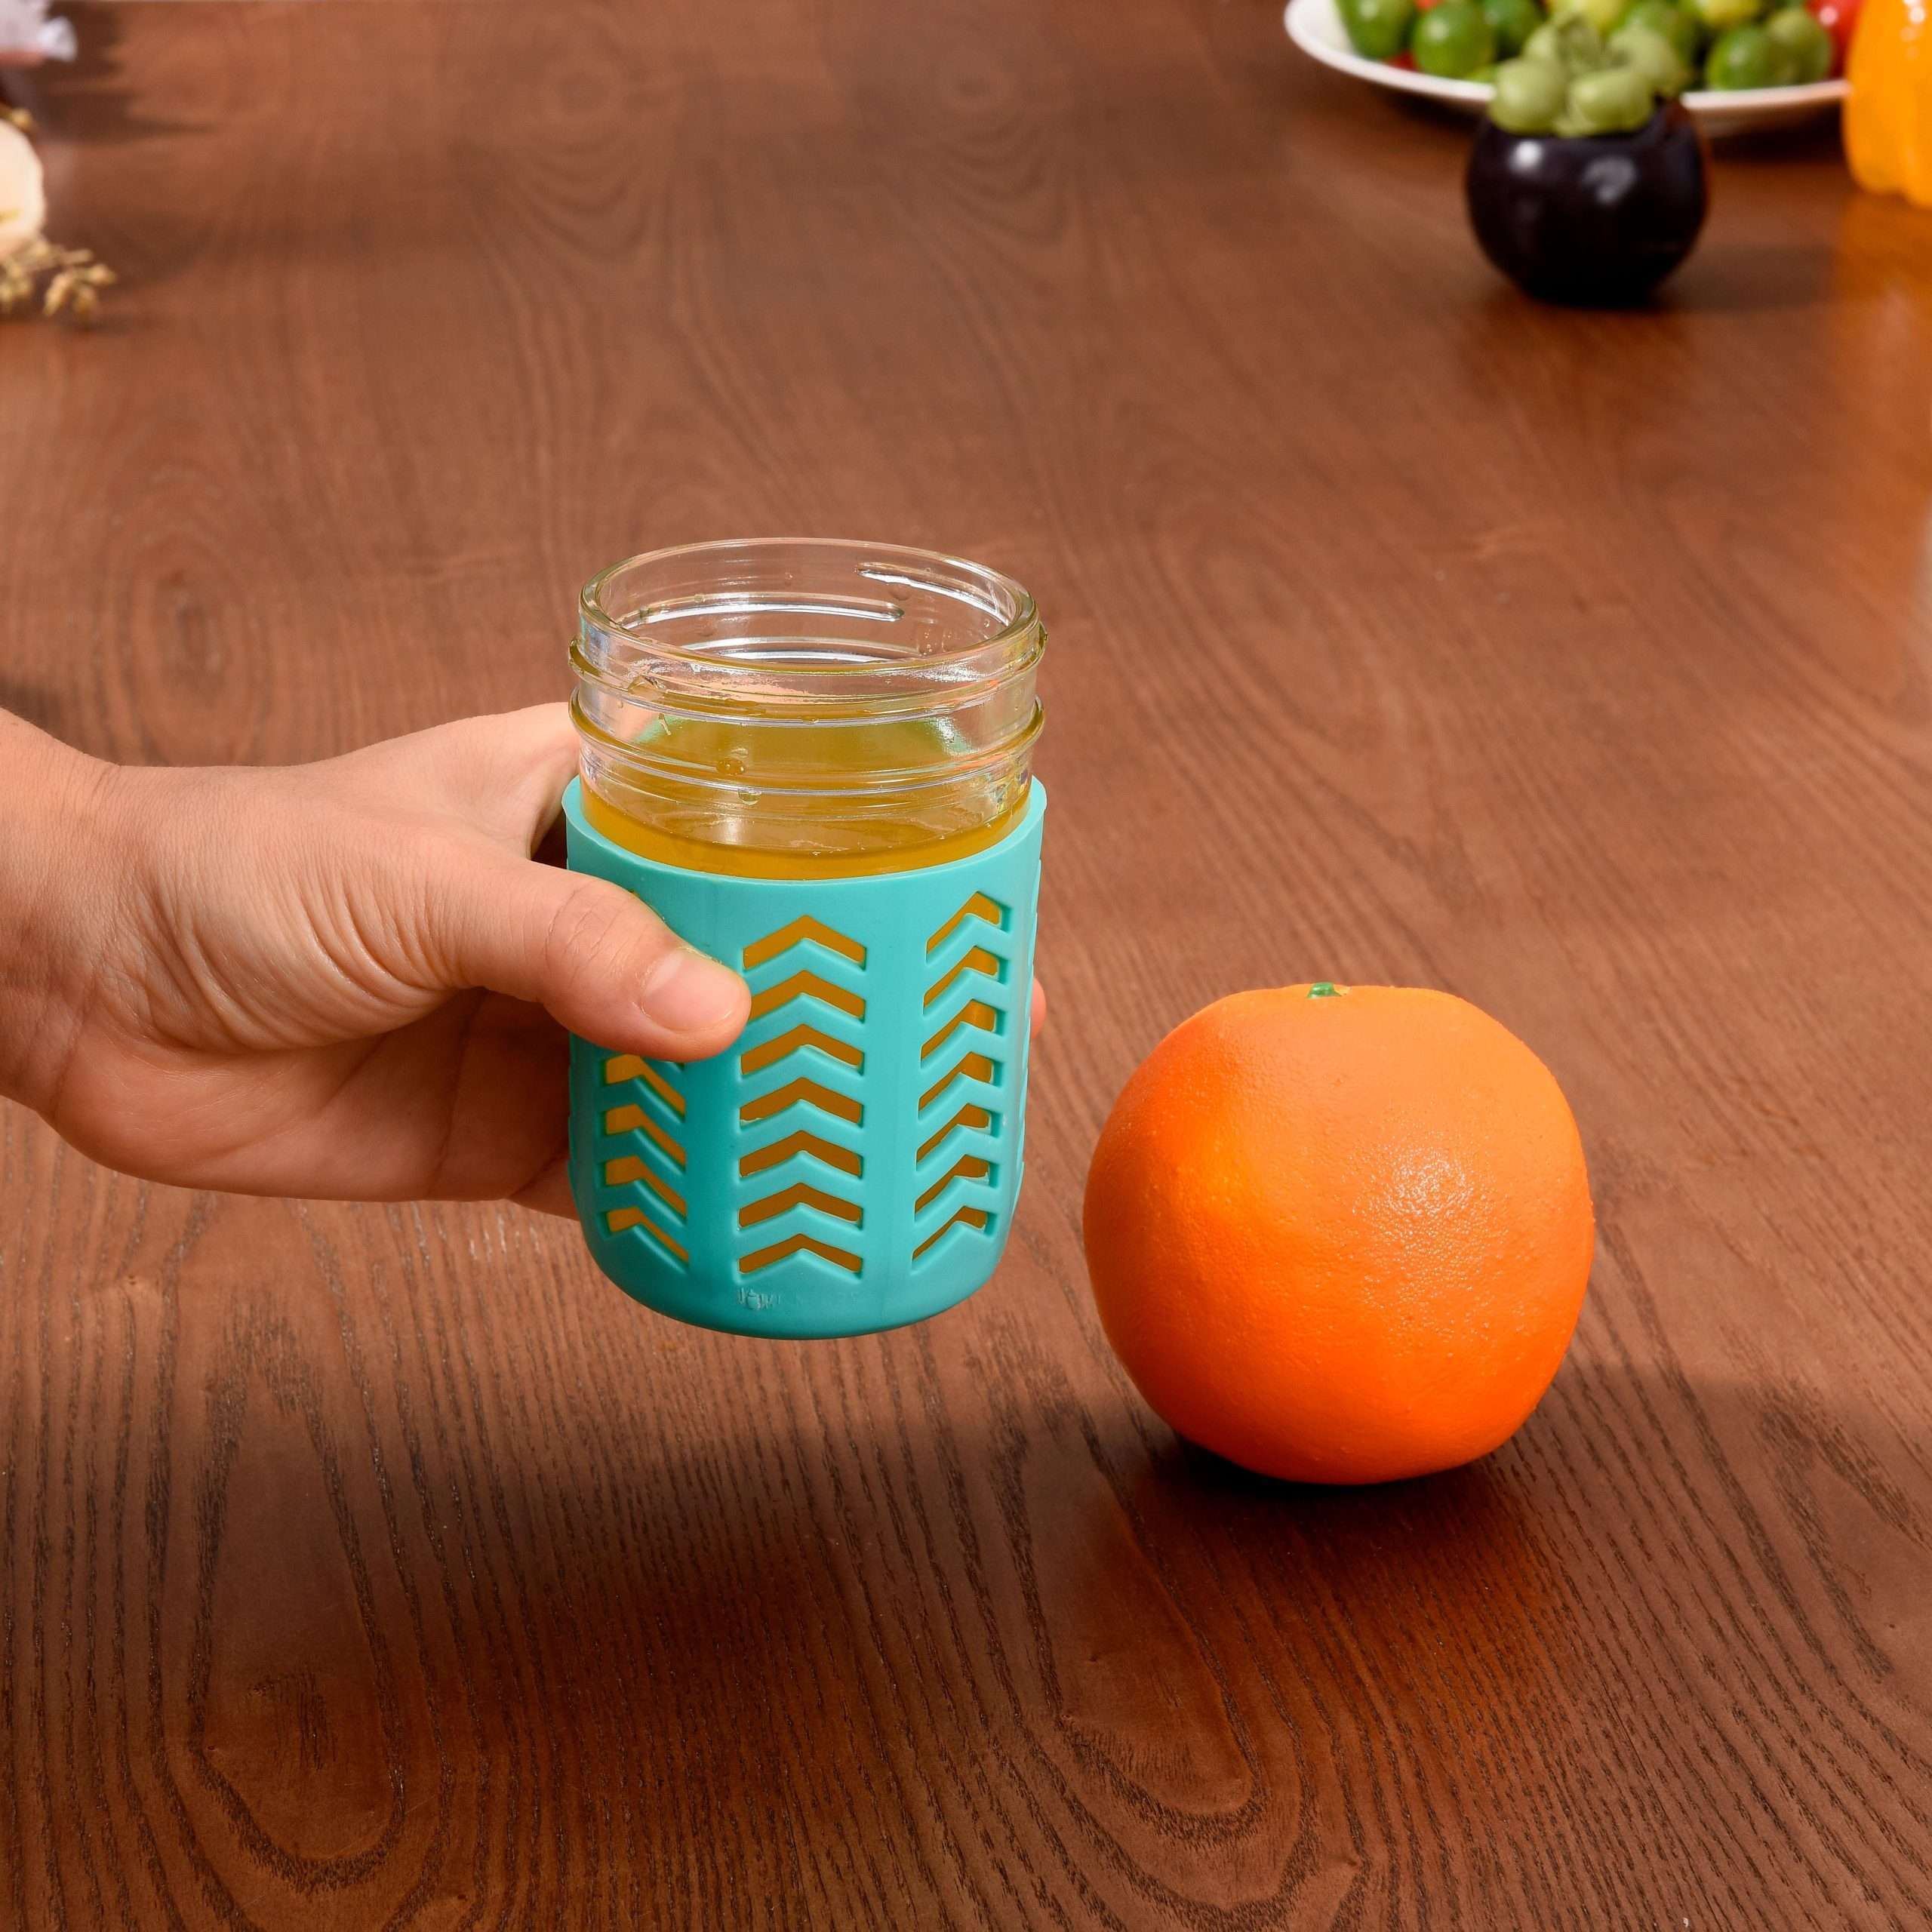 Danhaei Kids & Toddler Cups  The Original Glass Mason jars 8 oz